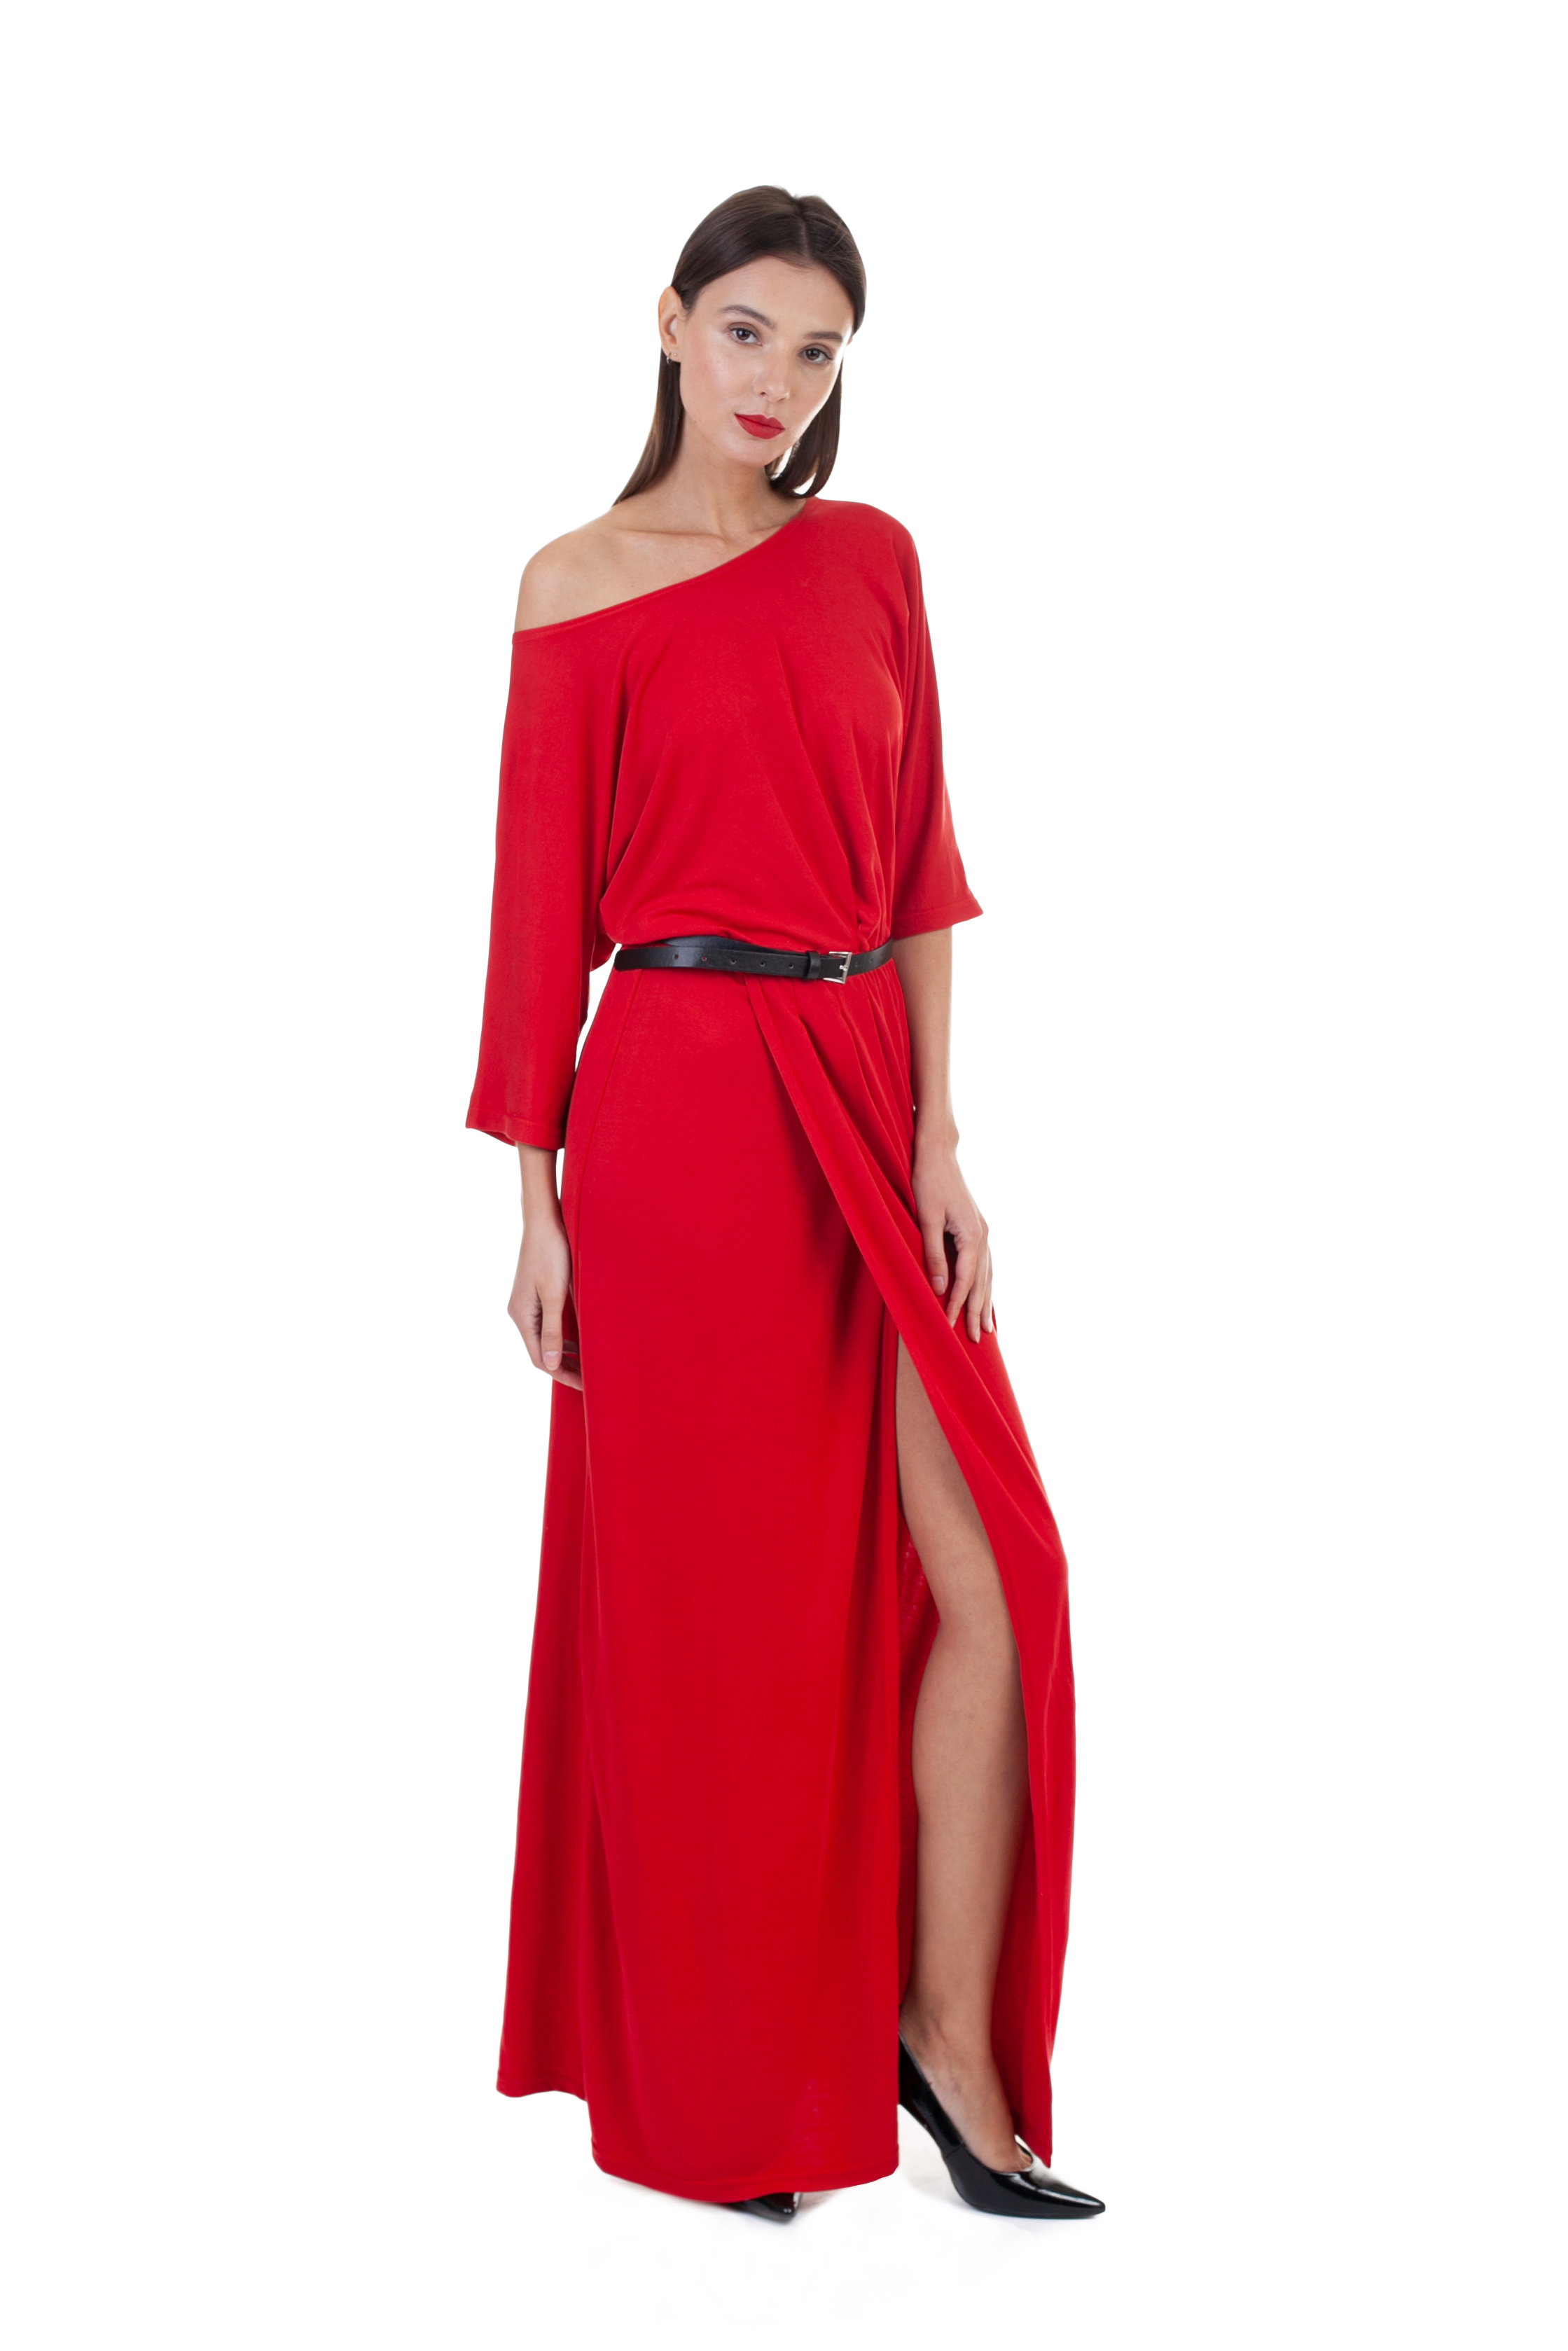 Платье в пол с разрезом (арт. baon B458128), размер L, цвет красный Платье в пол с разрезом (арт. baon B458128) - фото 1